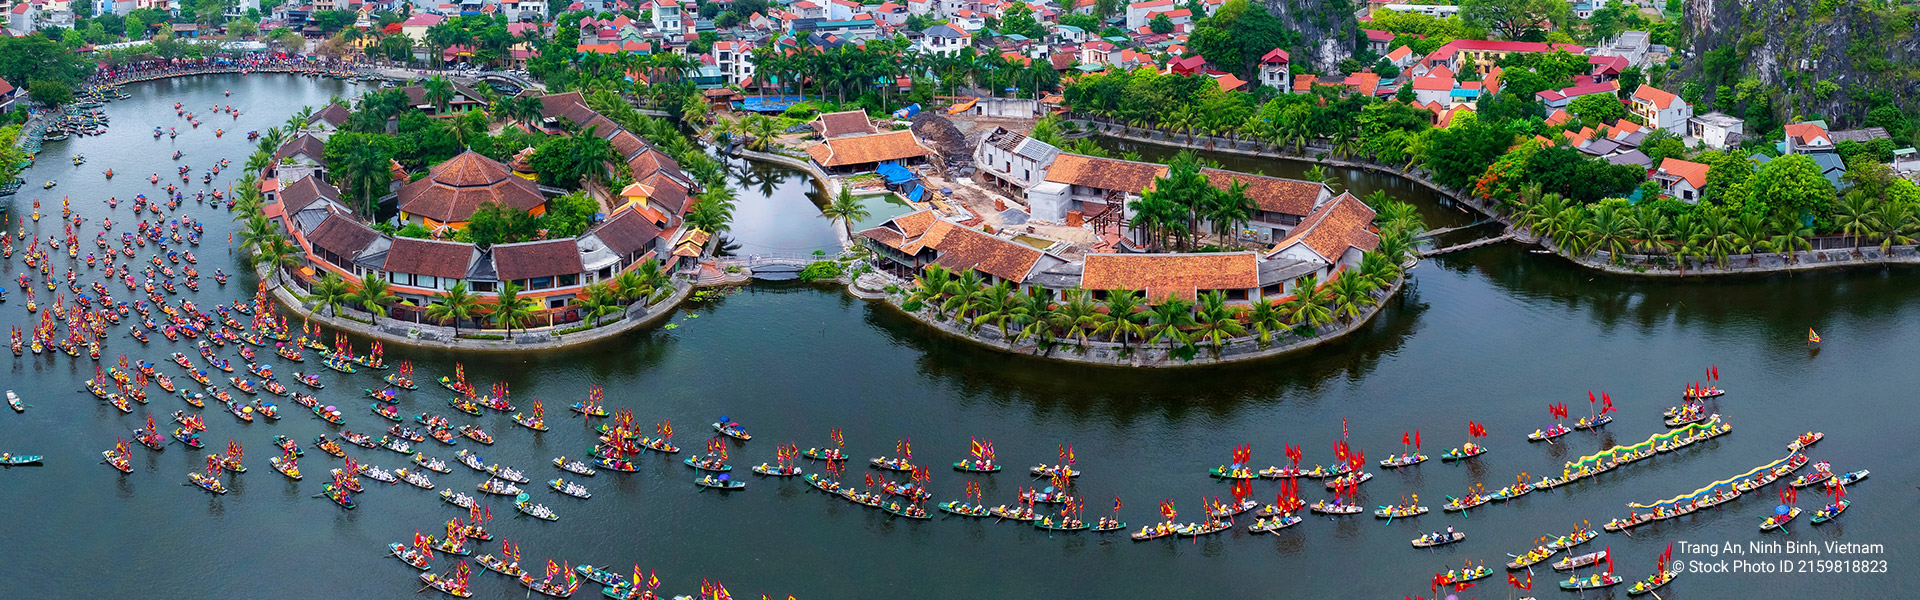 Trang An, Ninh Binh, Vietnam, Stock Photo ID 2159818823
